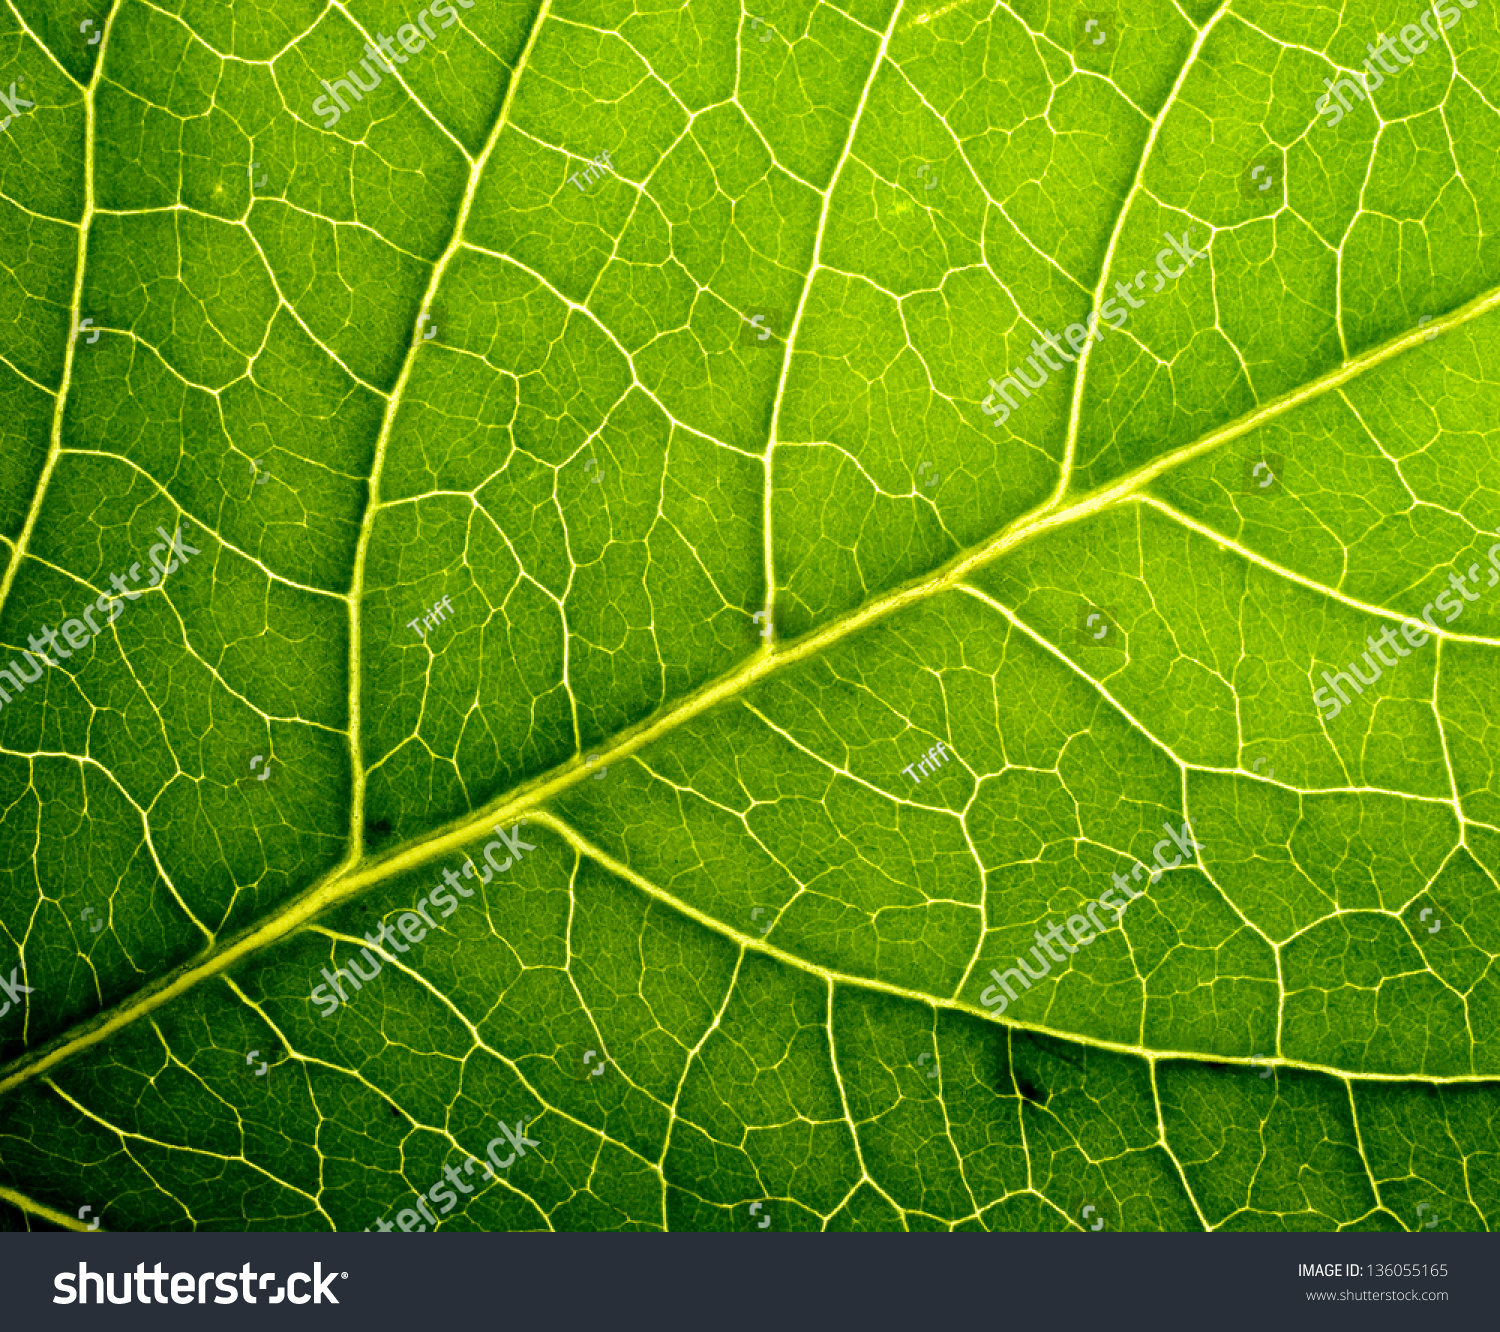 Leaf Texture Stock Photo 136055165 - Shutterstock